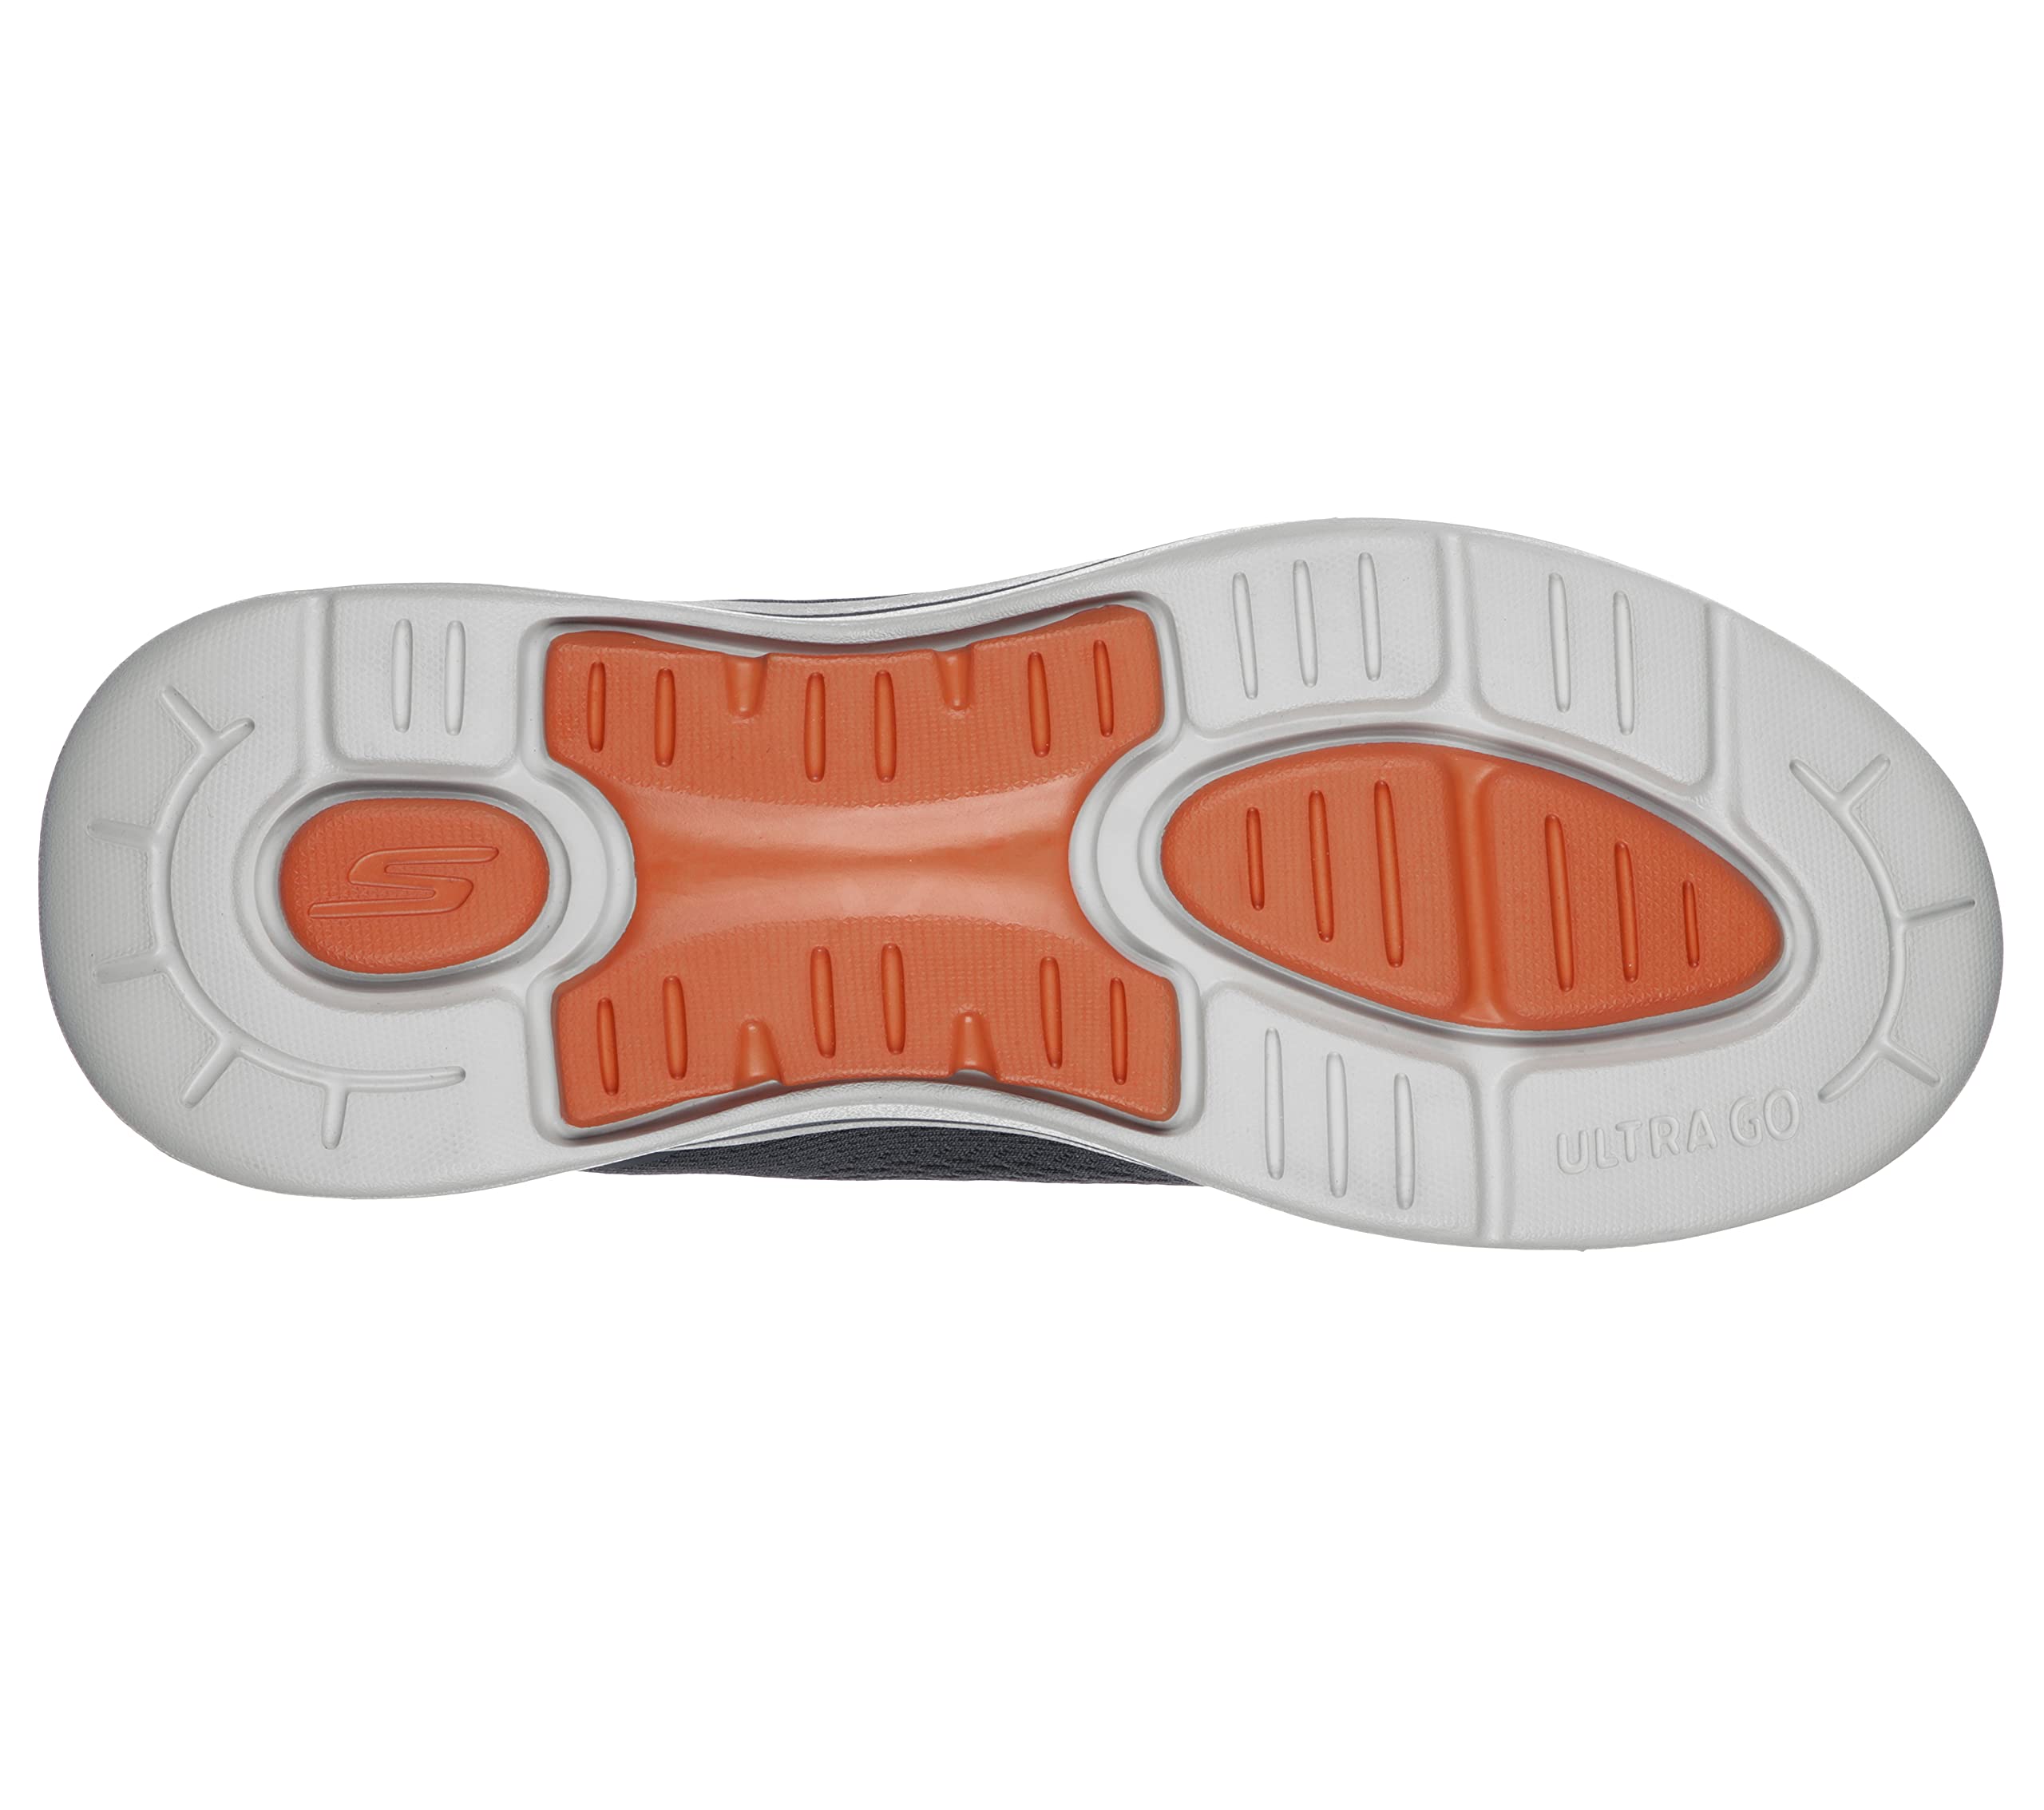 Skechers Men's Gowalk Arch Fit-Athletic Workout Walking Shoe with Air Cooled Foam Sneaker